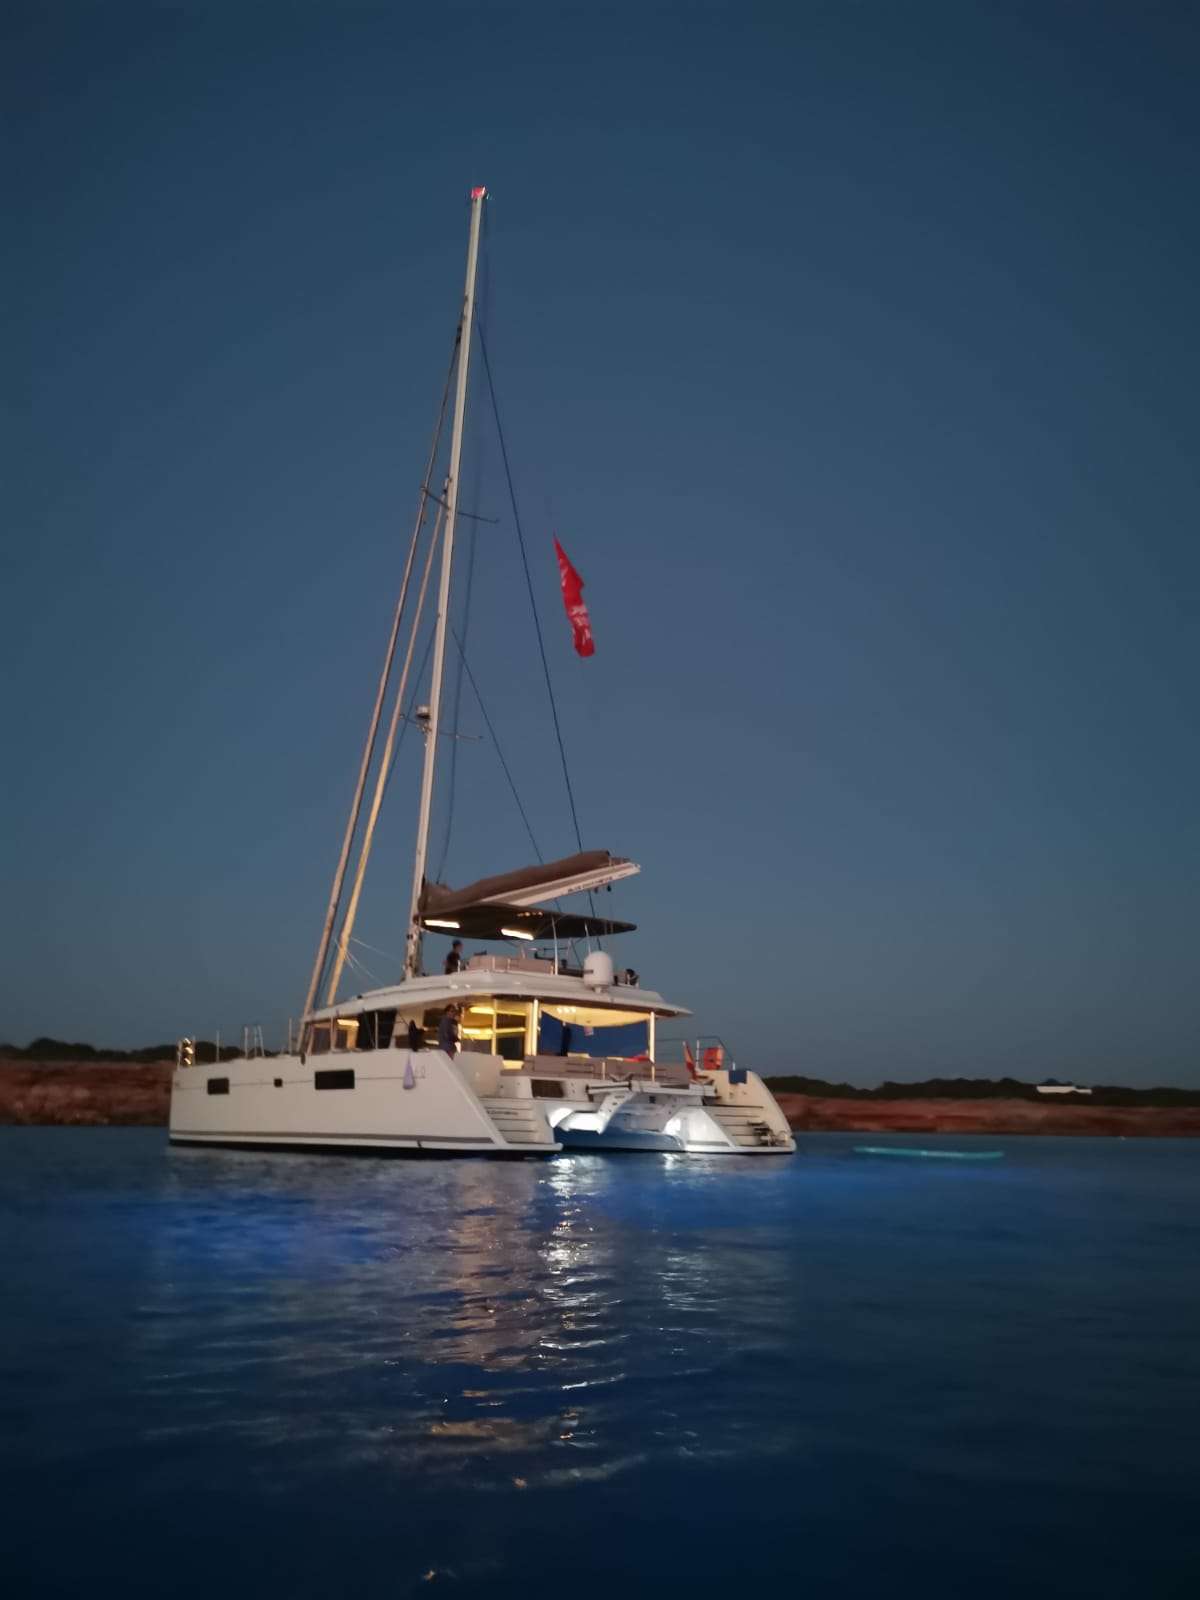 ISLAS CHAFARINAS Yacht Charter - Aft view at night